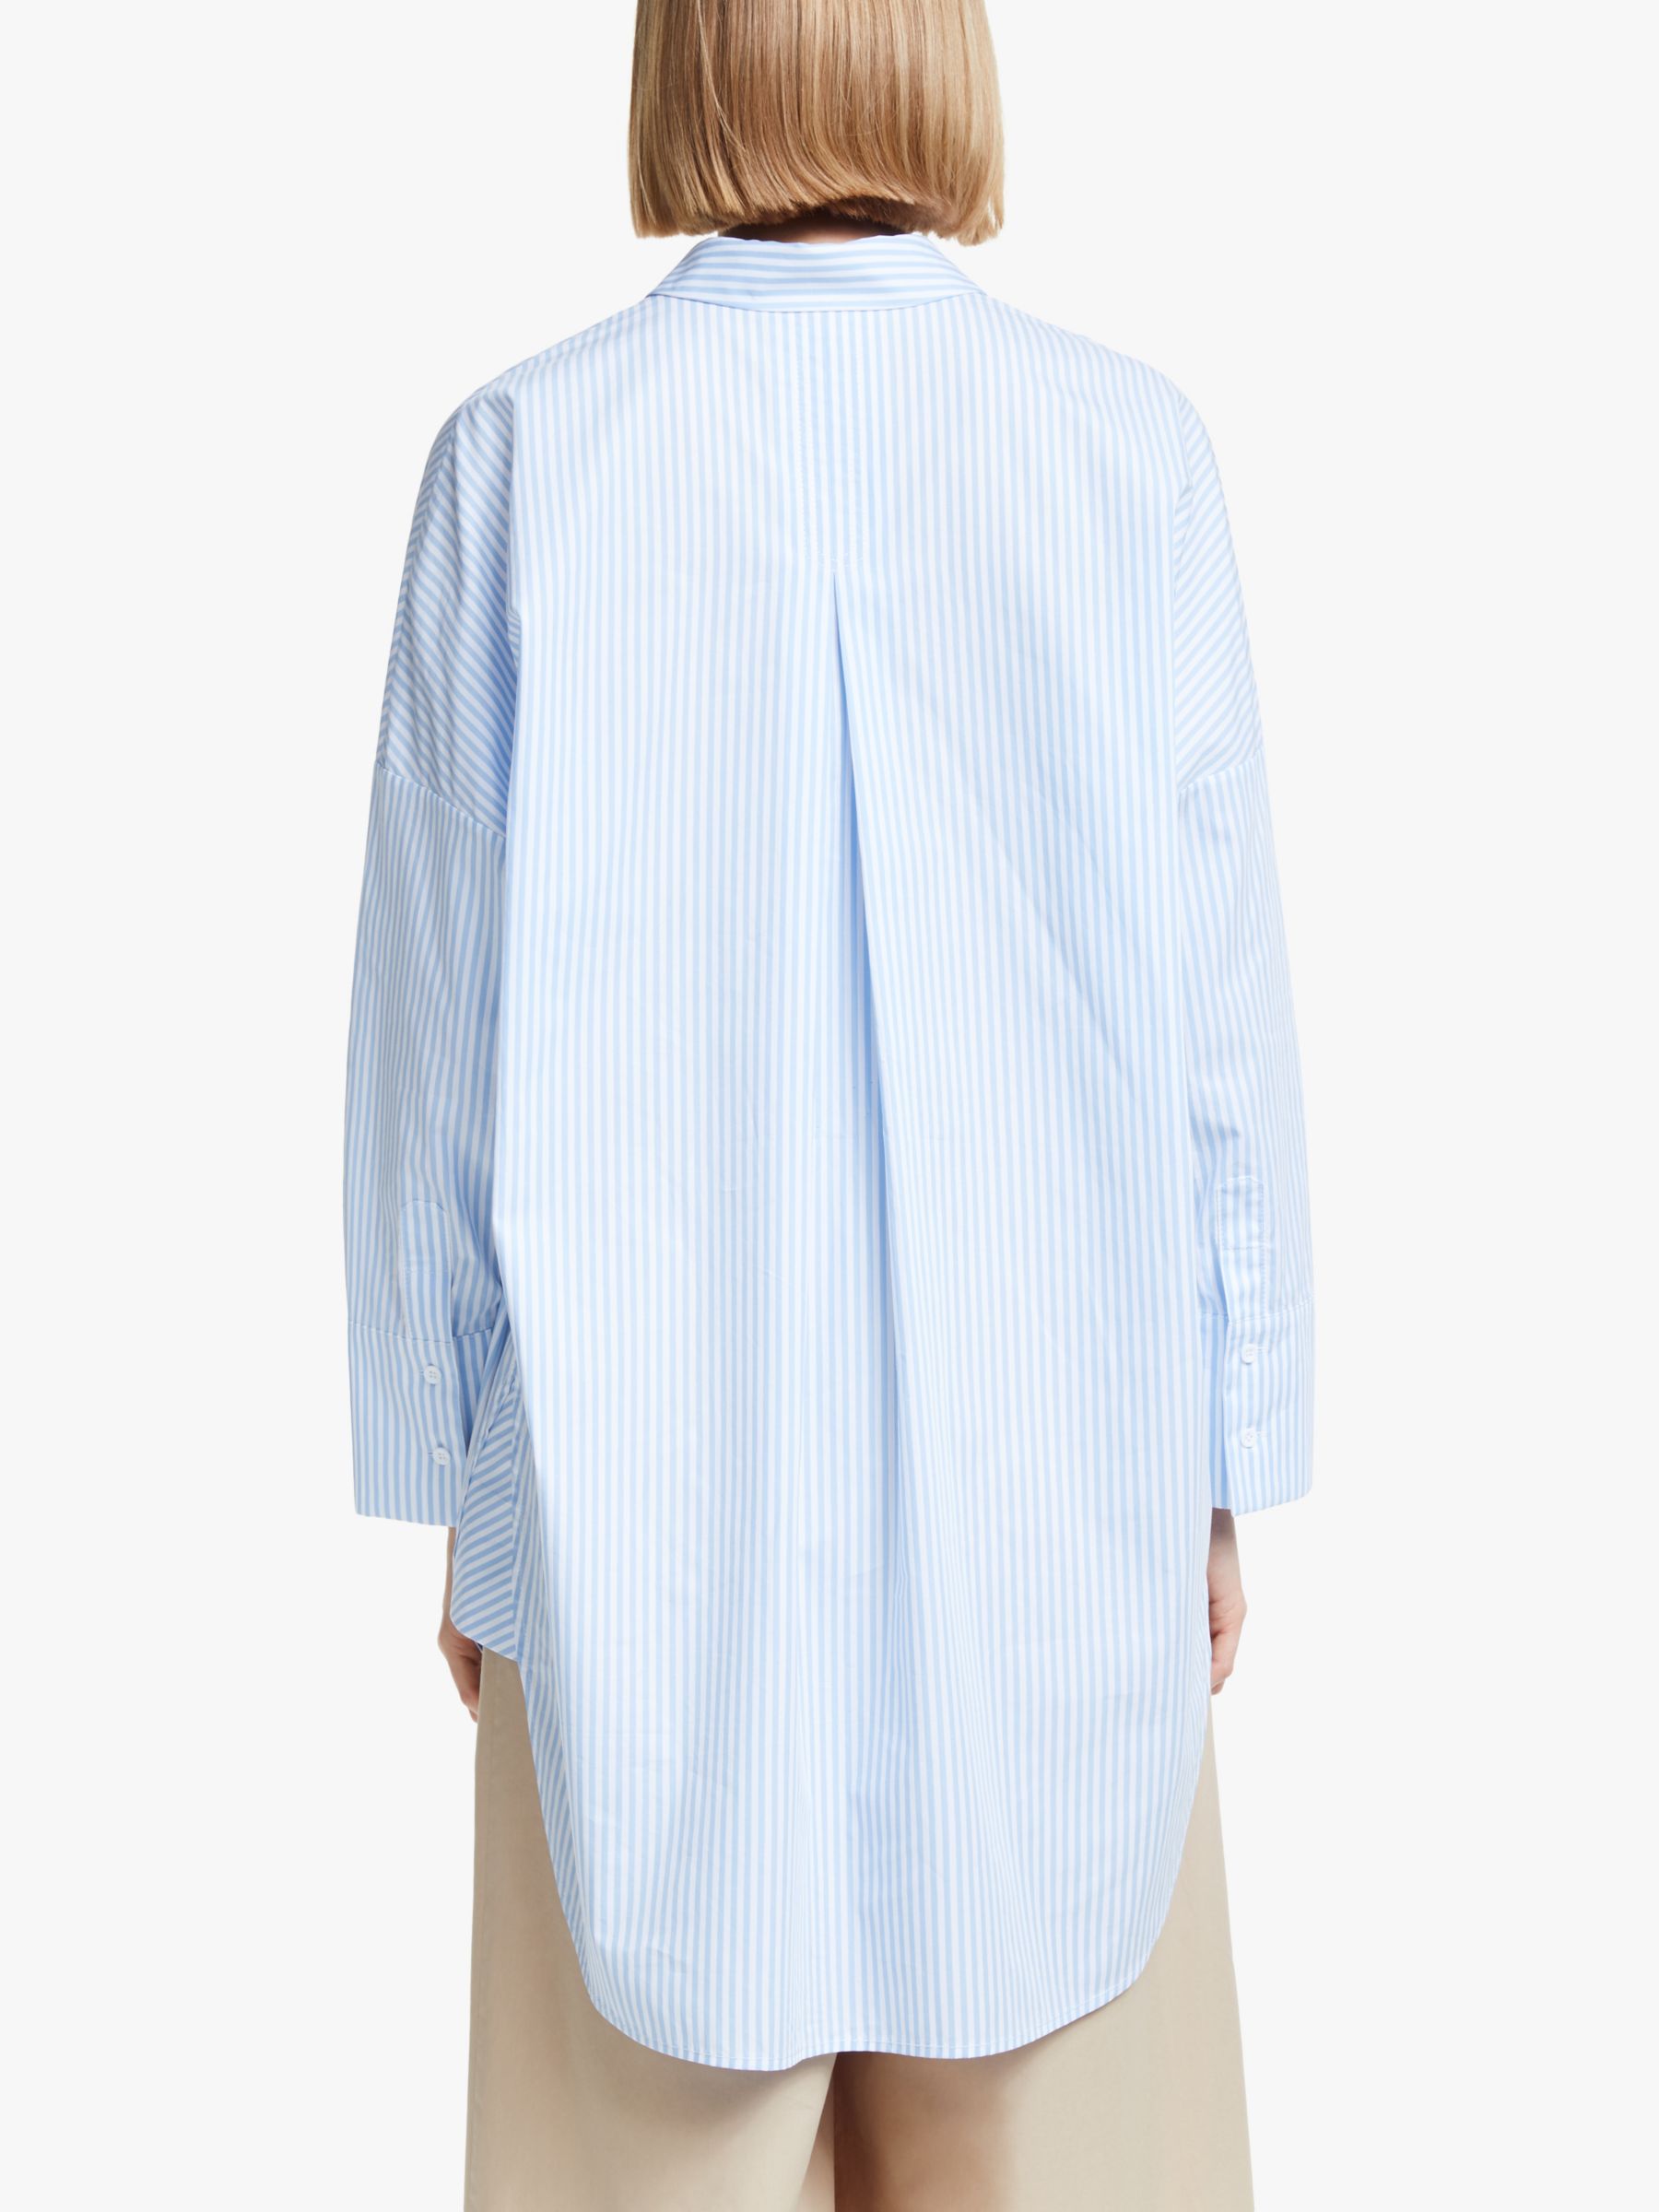 Kin Stripe Cotton Poplin Shirt, Blue